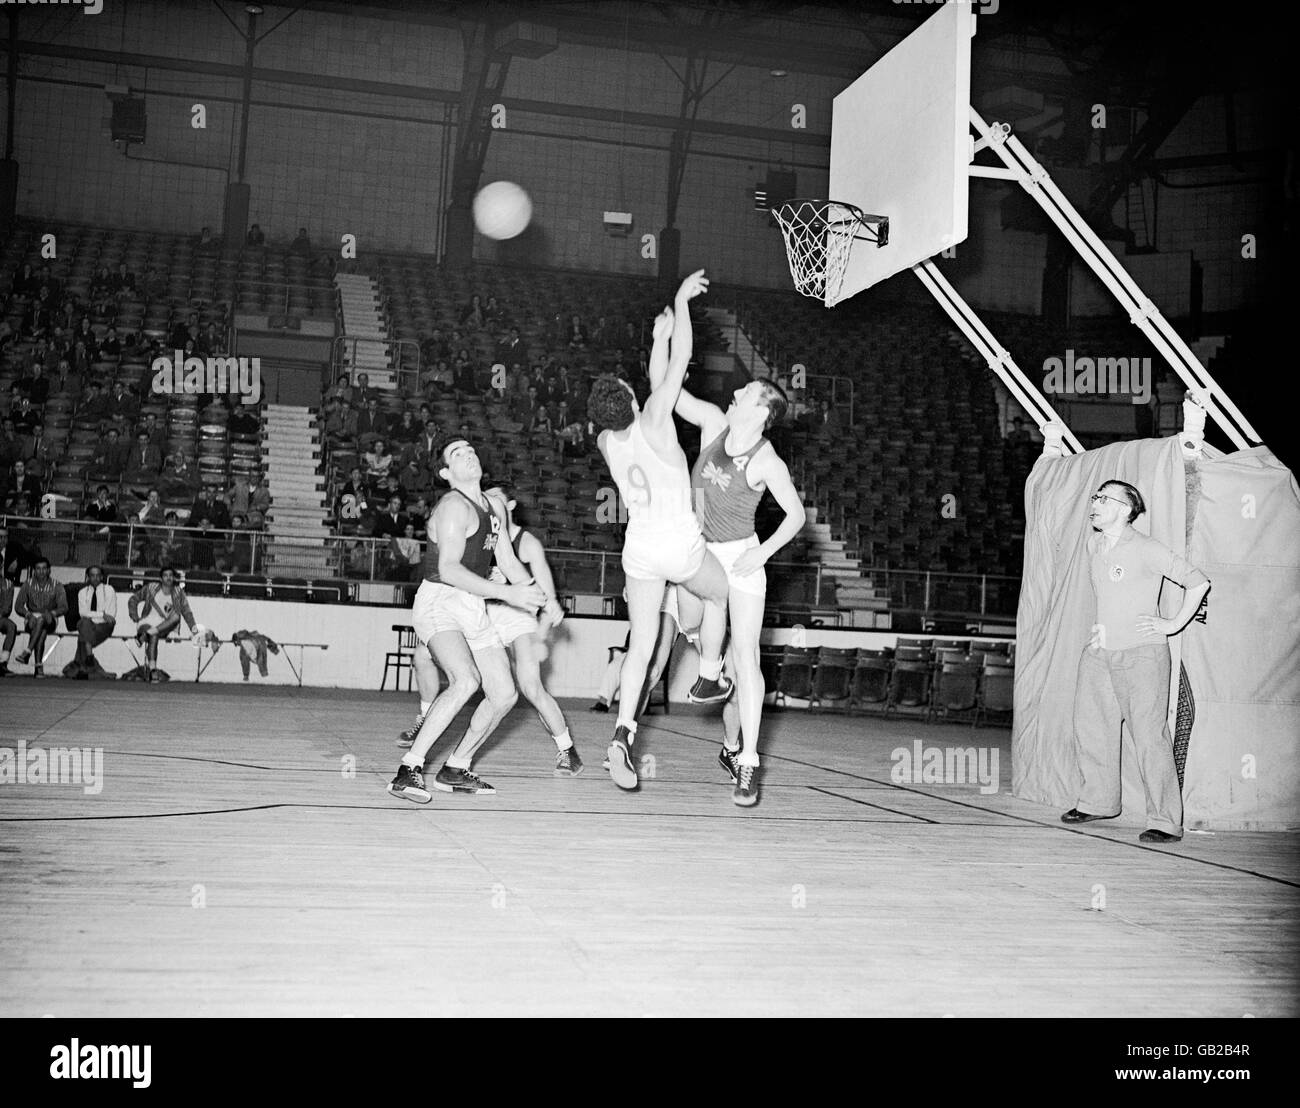 London Olympic Games 1948 - Basketball - Harringay Stock Photo - Alamy